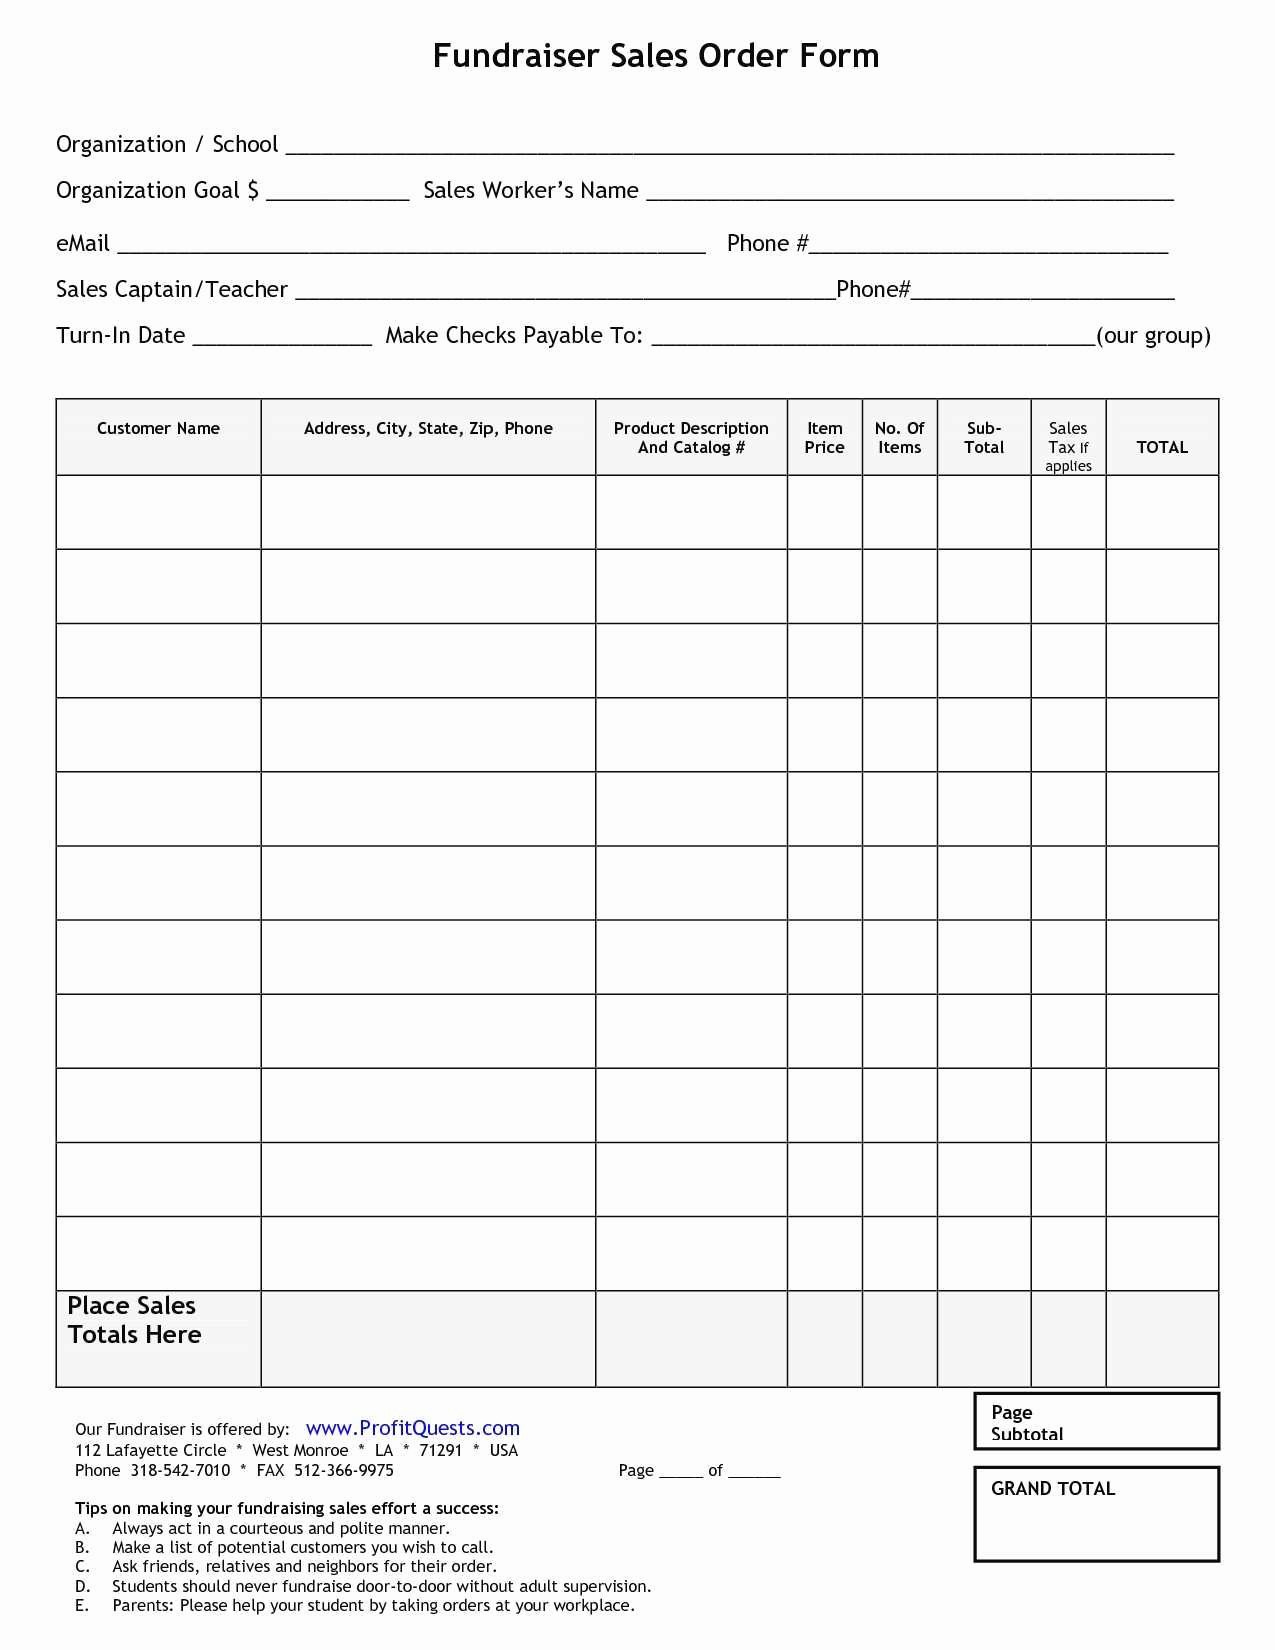 Fundraiser order form Template Excel Unique Unique Excel Data Entry form Template Free Download